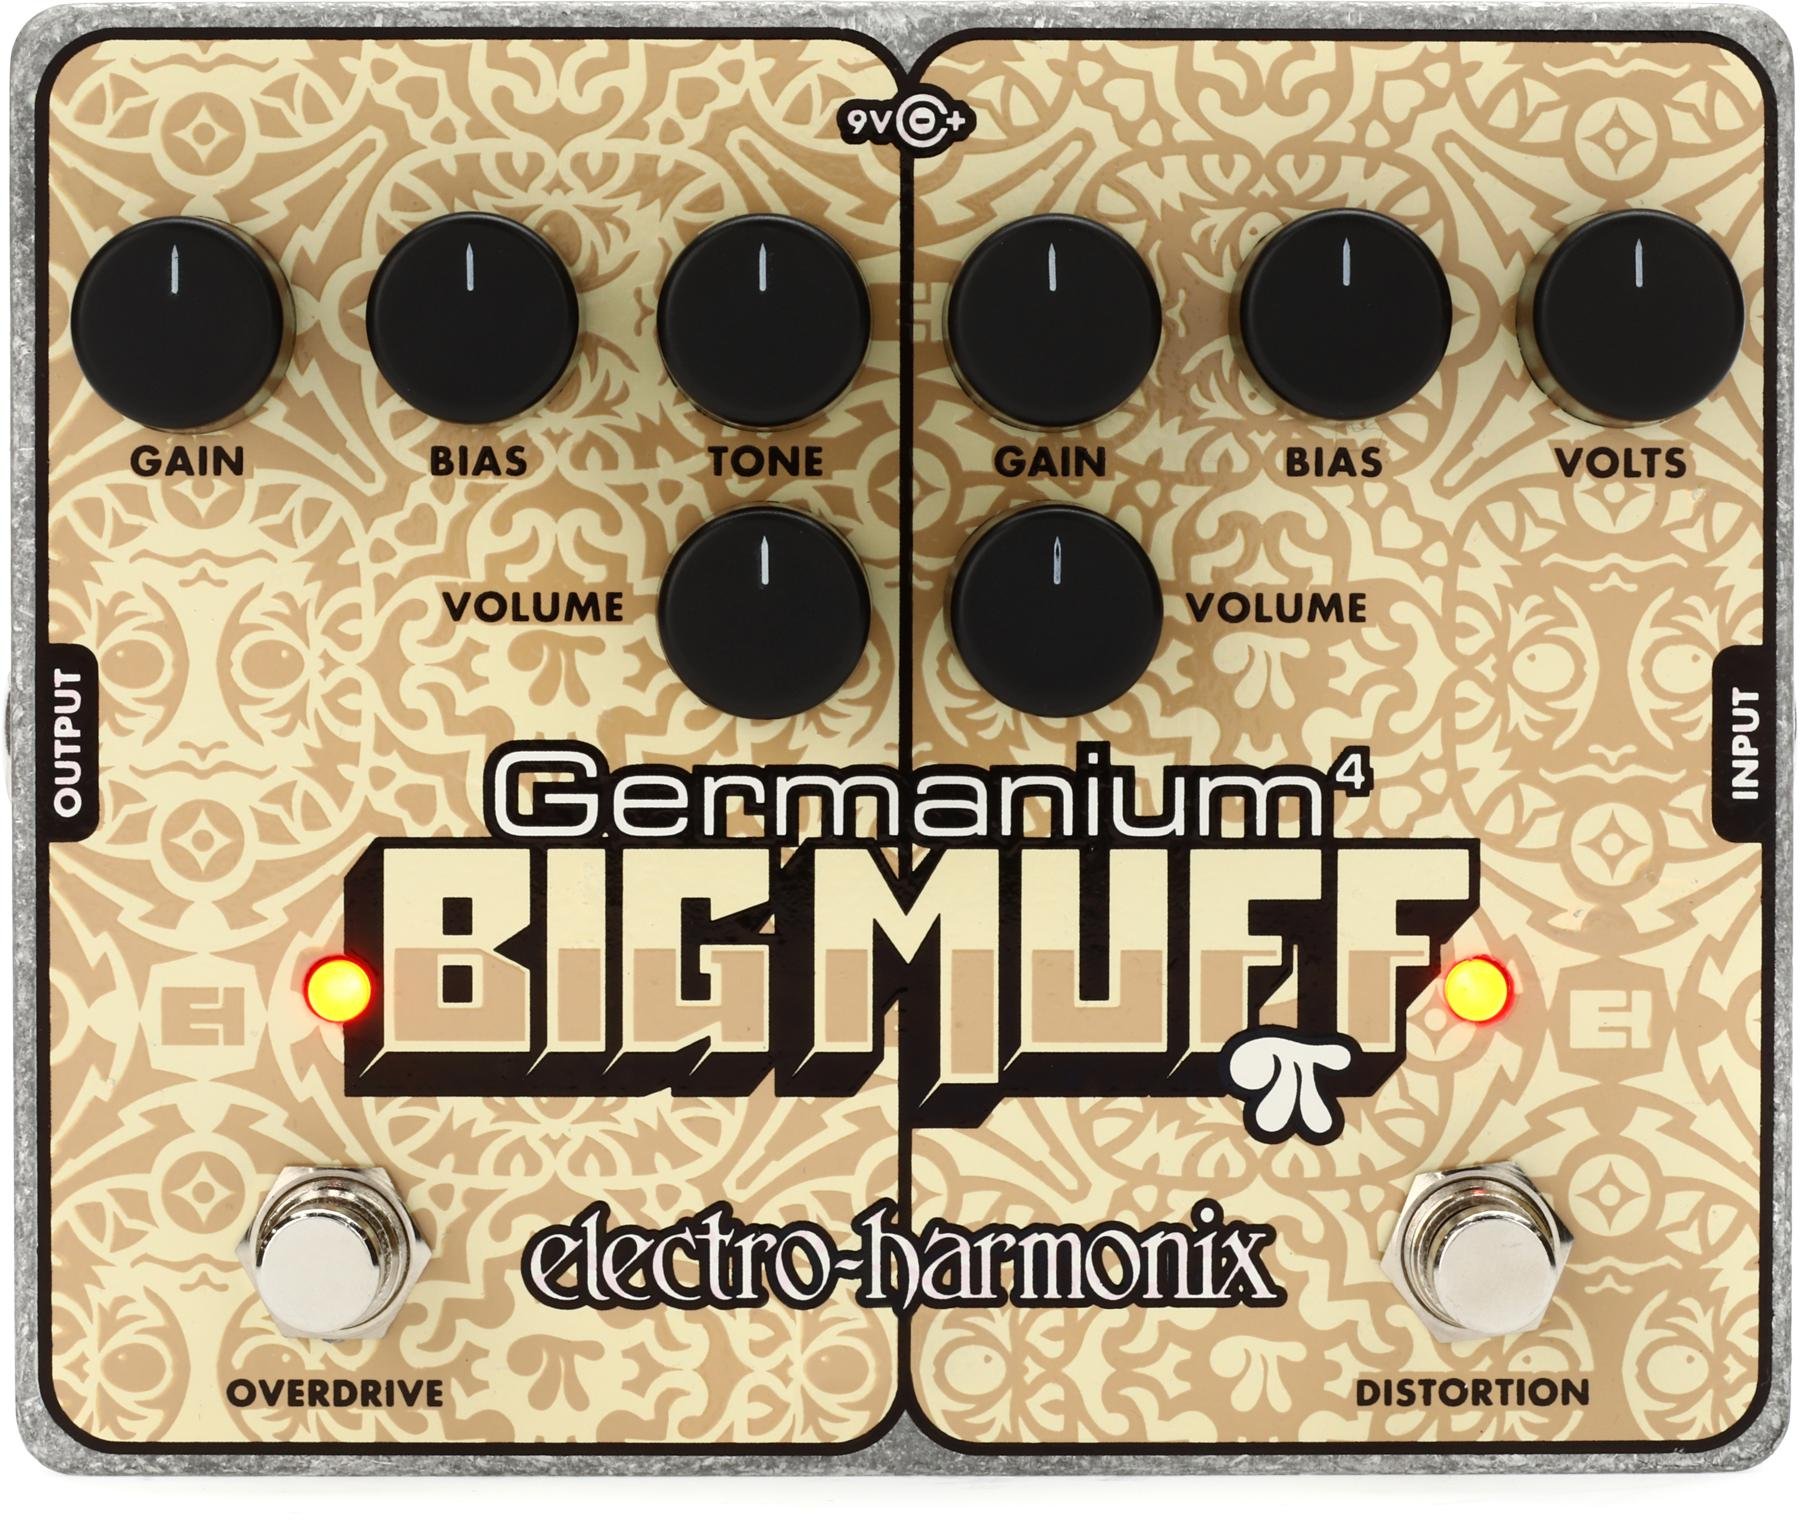 Electro-Harmonix Germanium 4 Big Muff Pi Distortion / Overdrive 